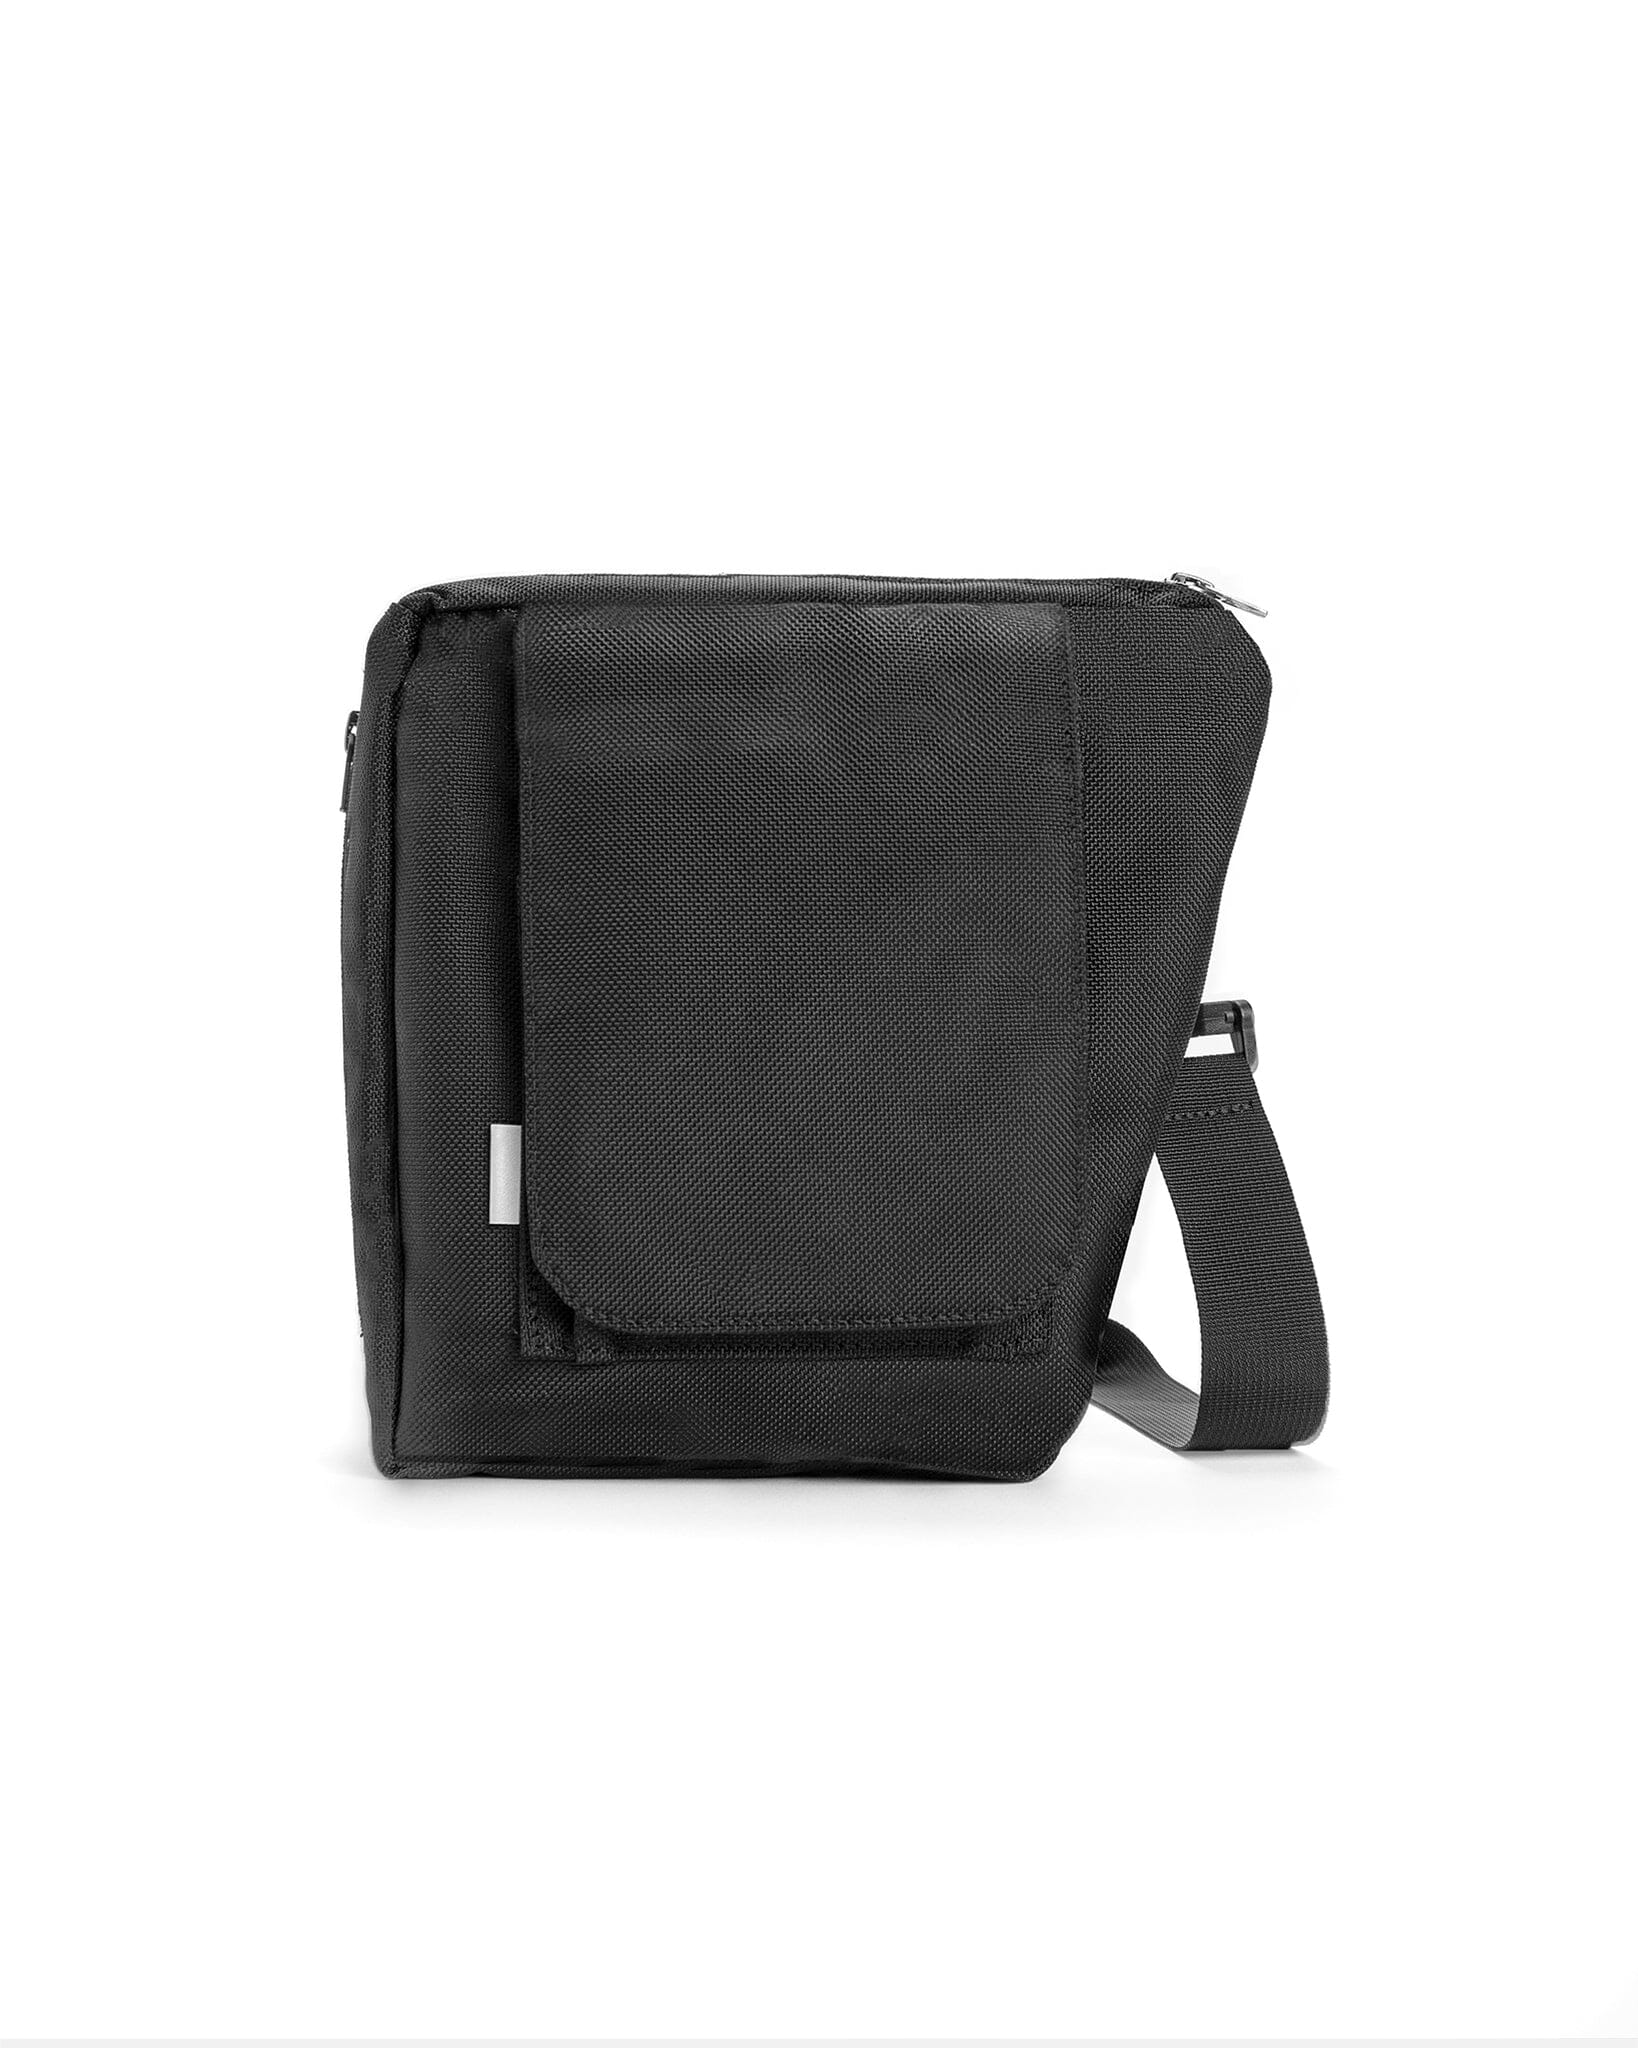 Small Carry - Stealth Bag bolstr Black Lefty 